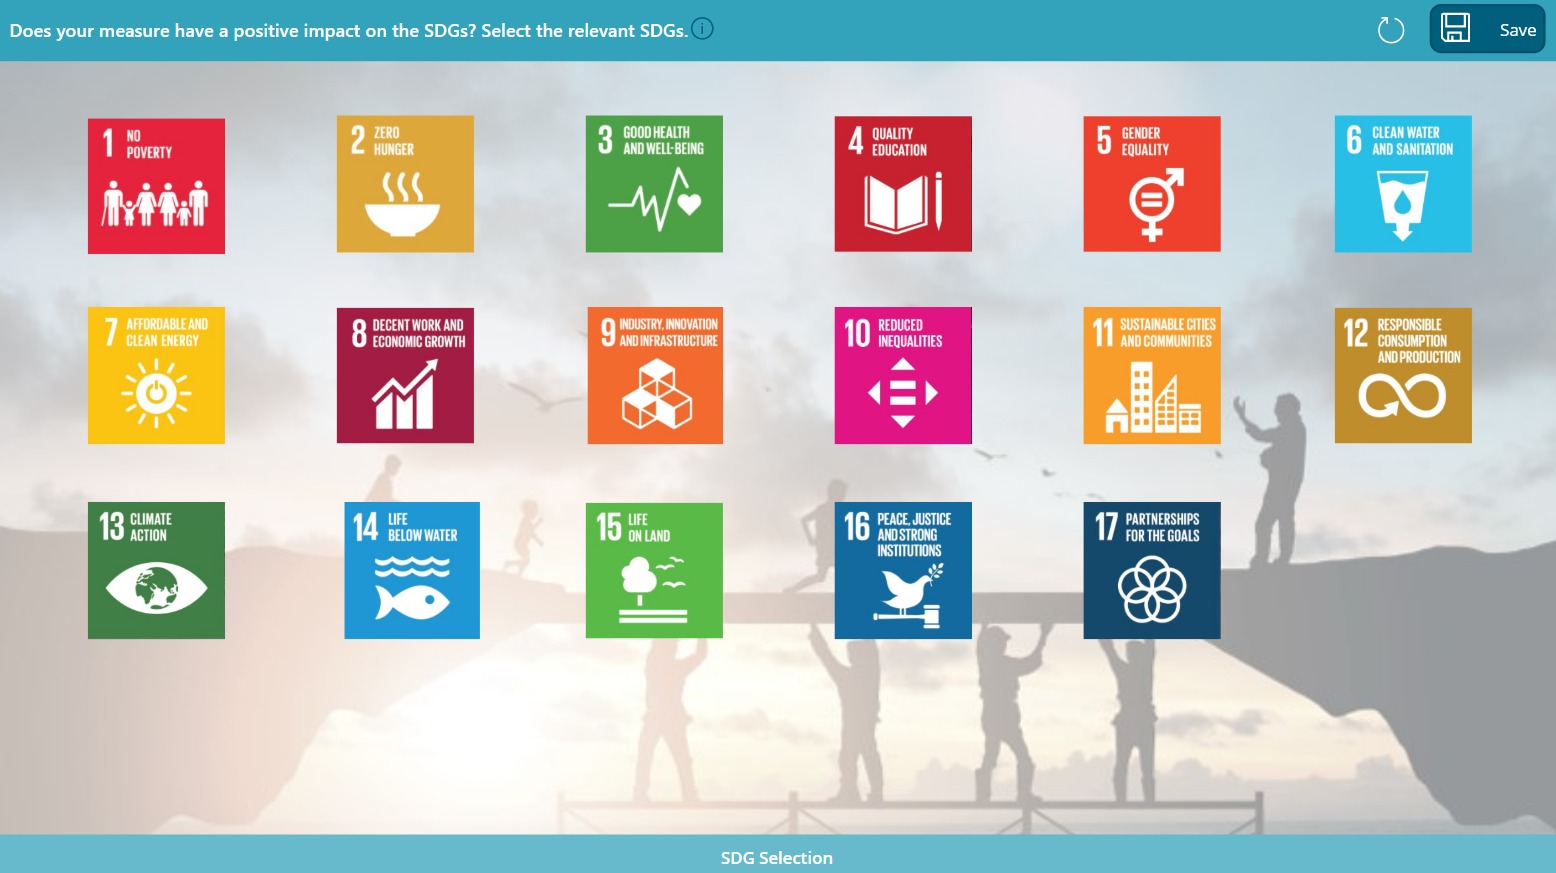 SDG Selection